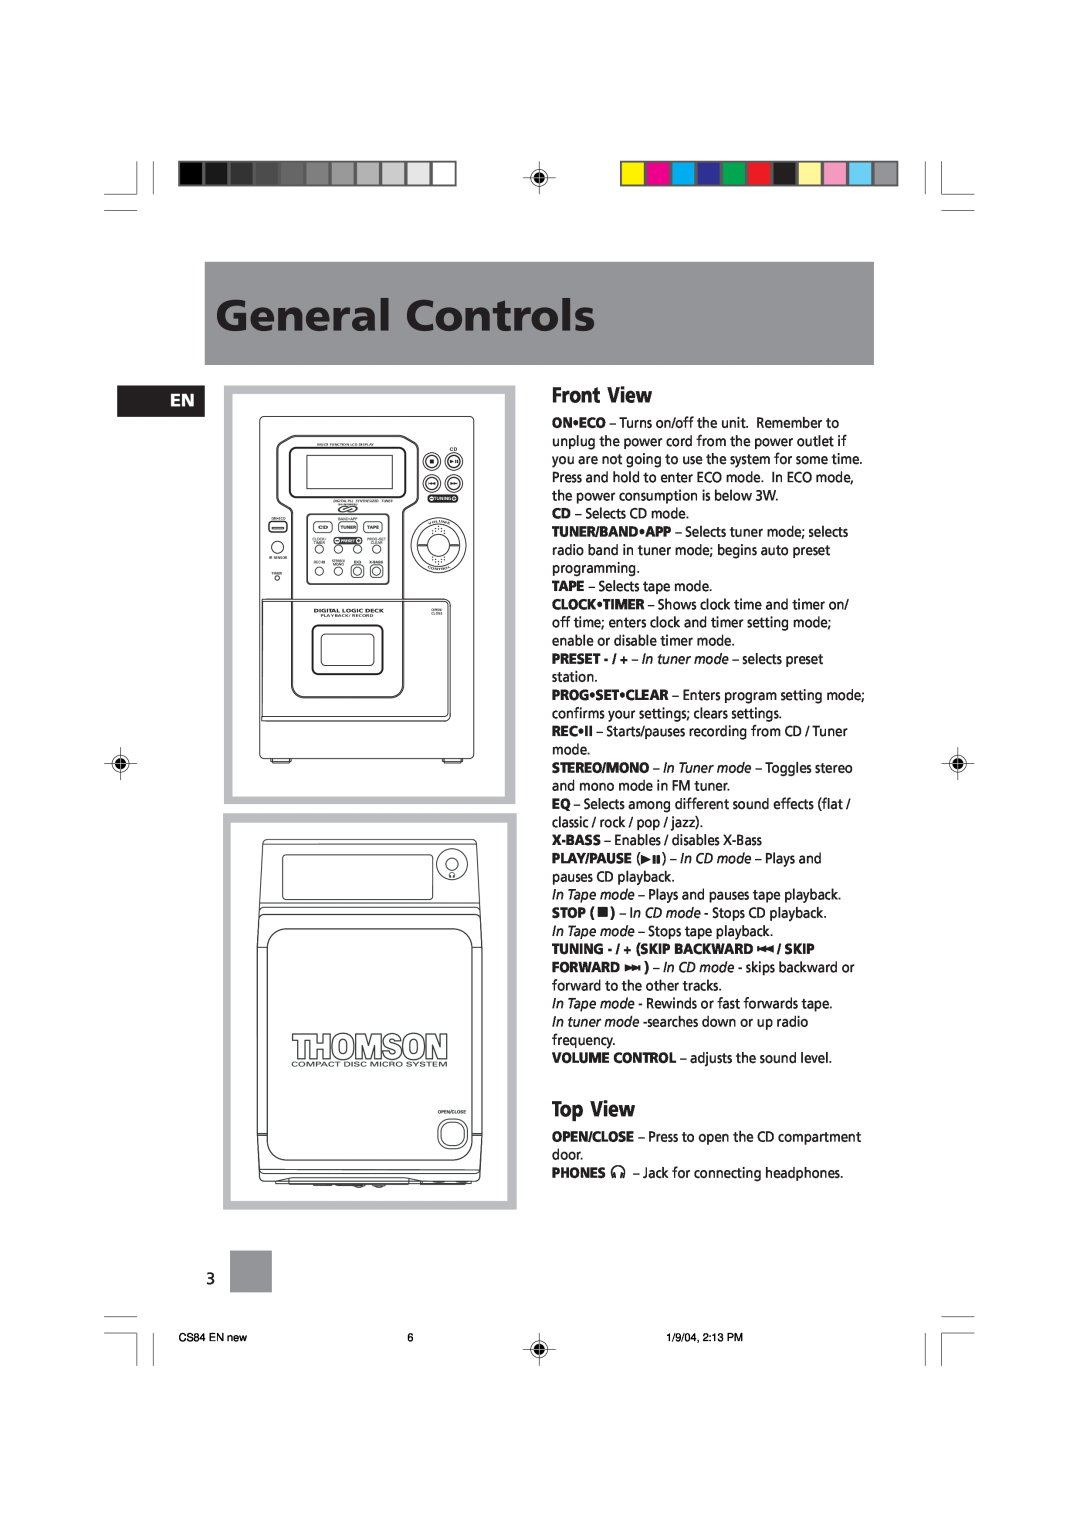 Technicolor - Thomson CS84 manual General Controls, Front View, Top View 